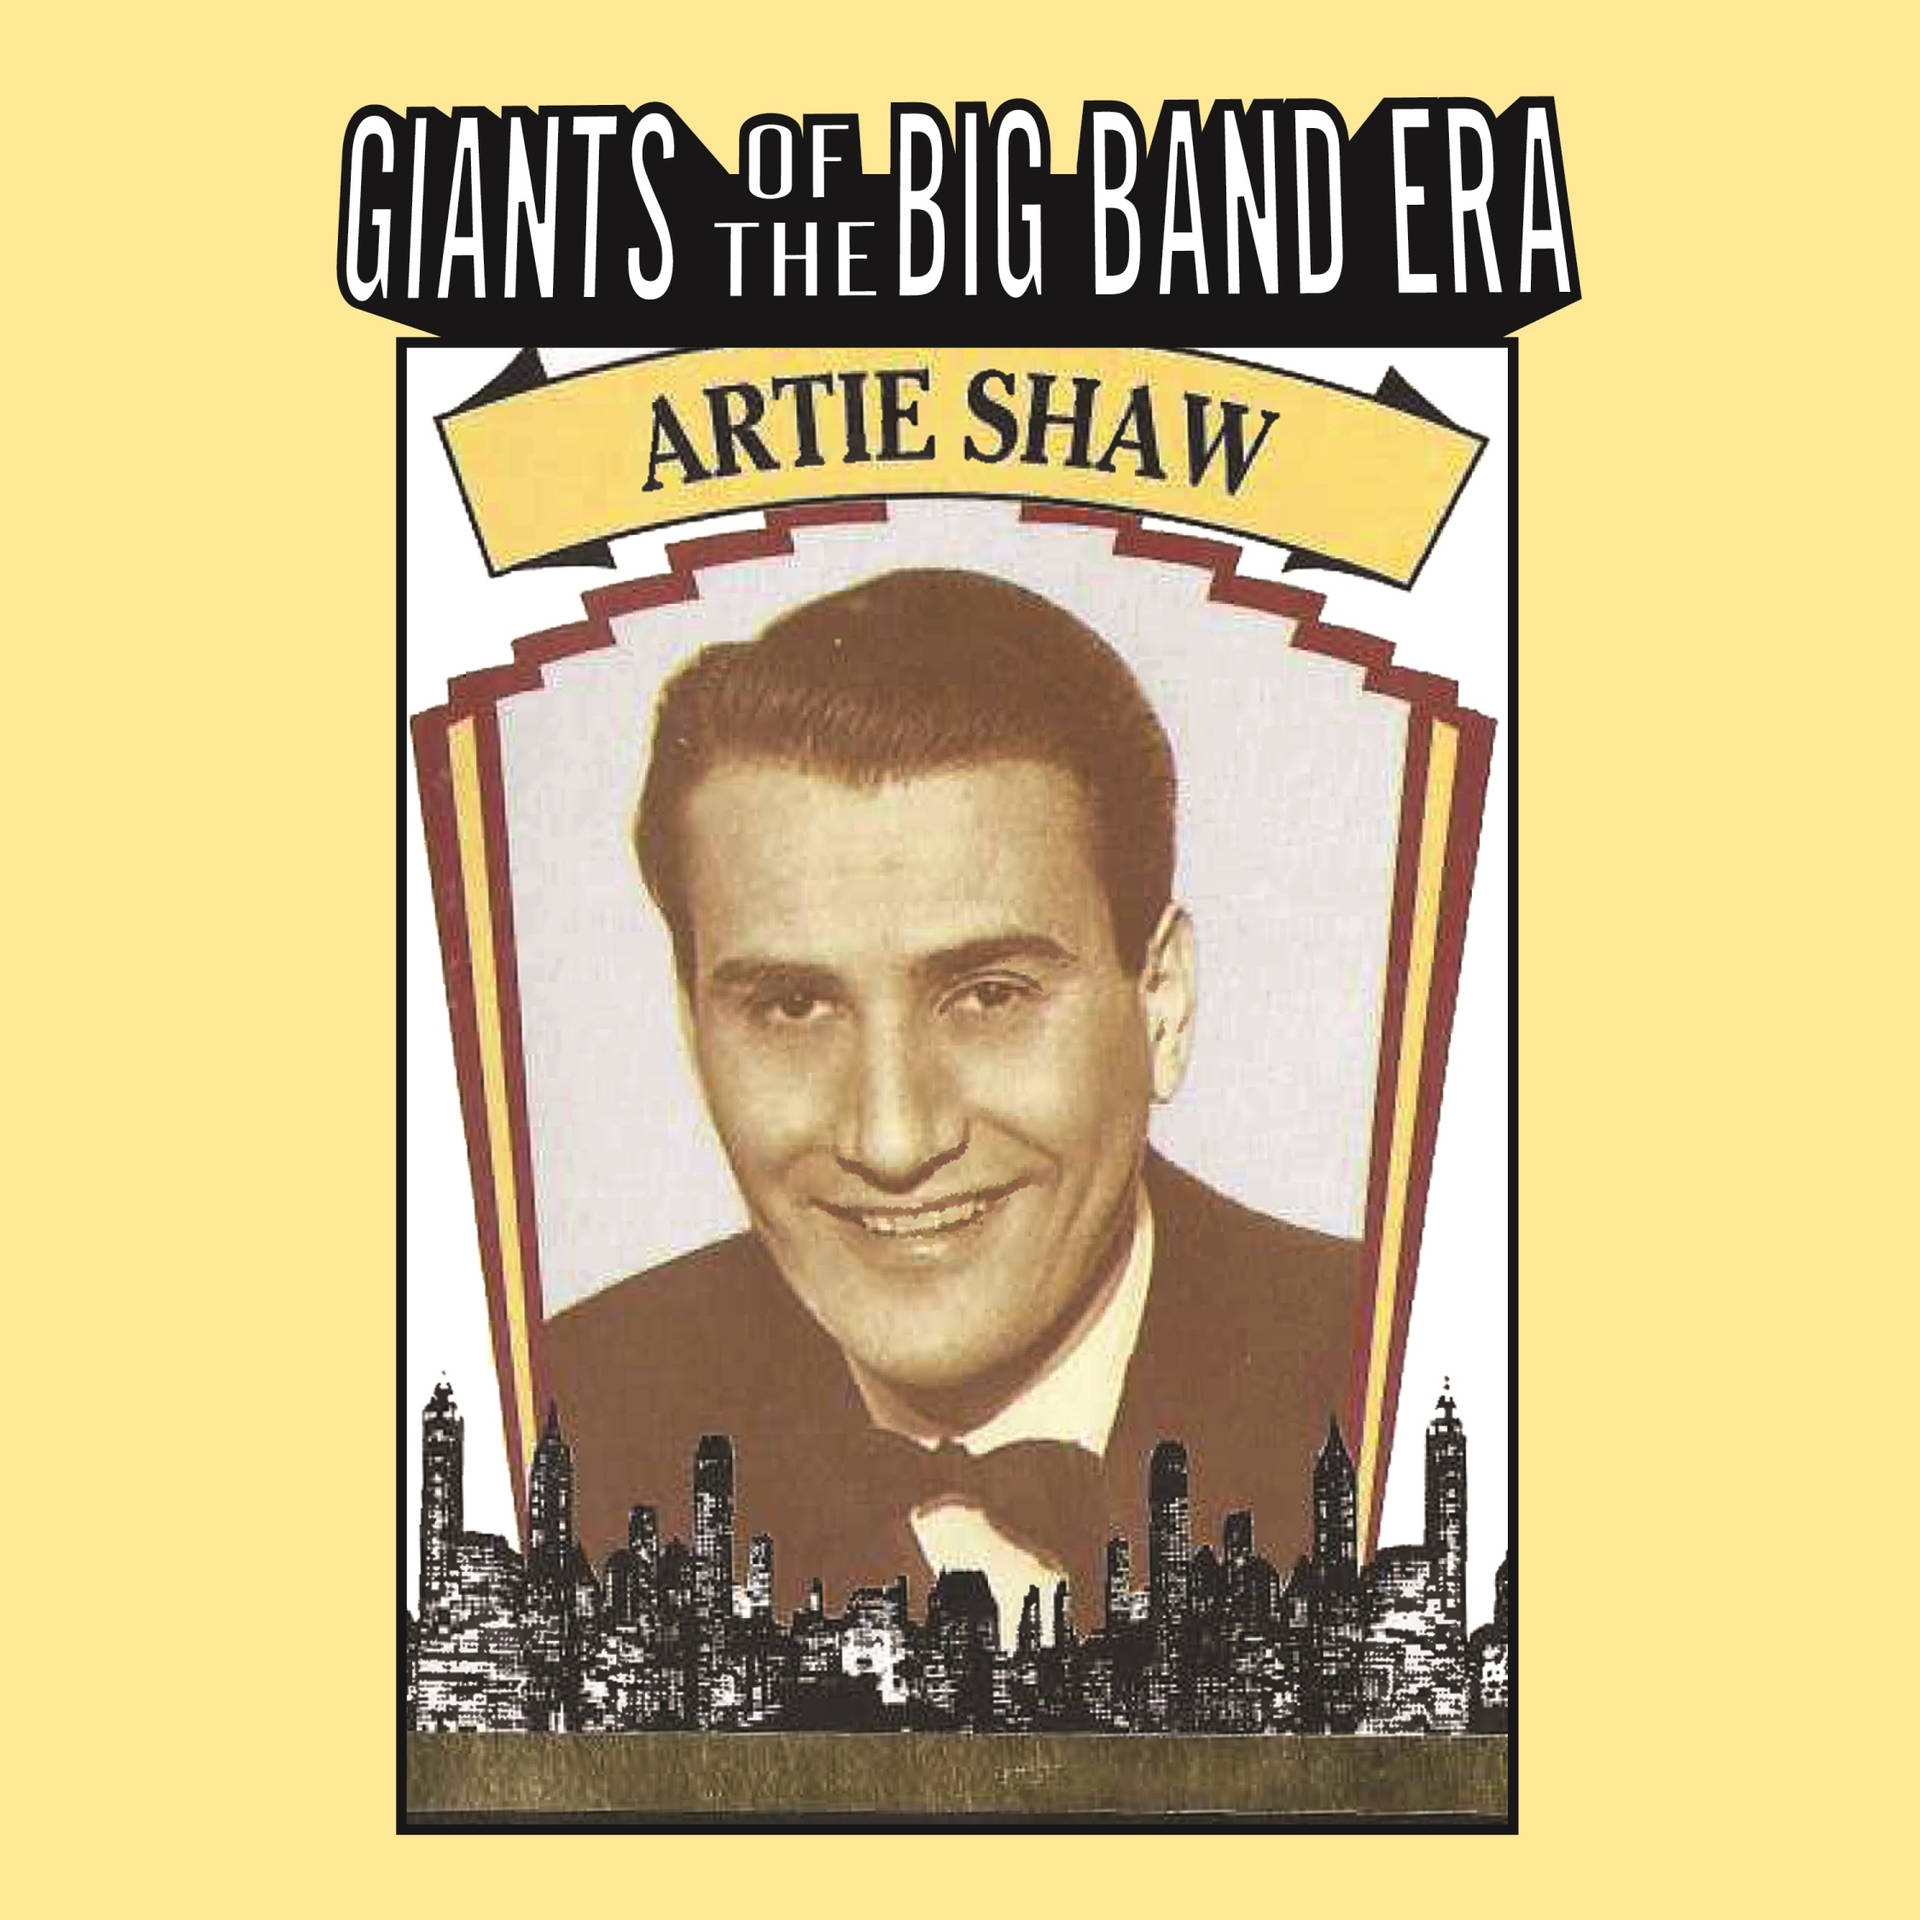 Artie Shaw - A Giant of the Big Band Era Album Cover Wallpaper